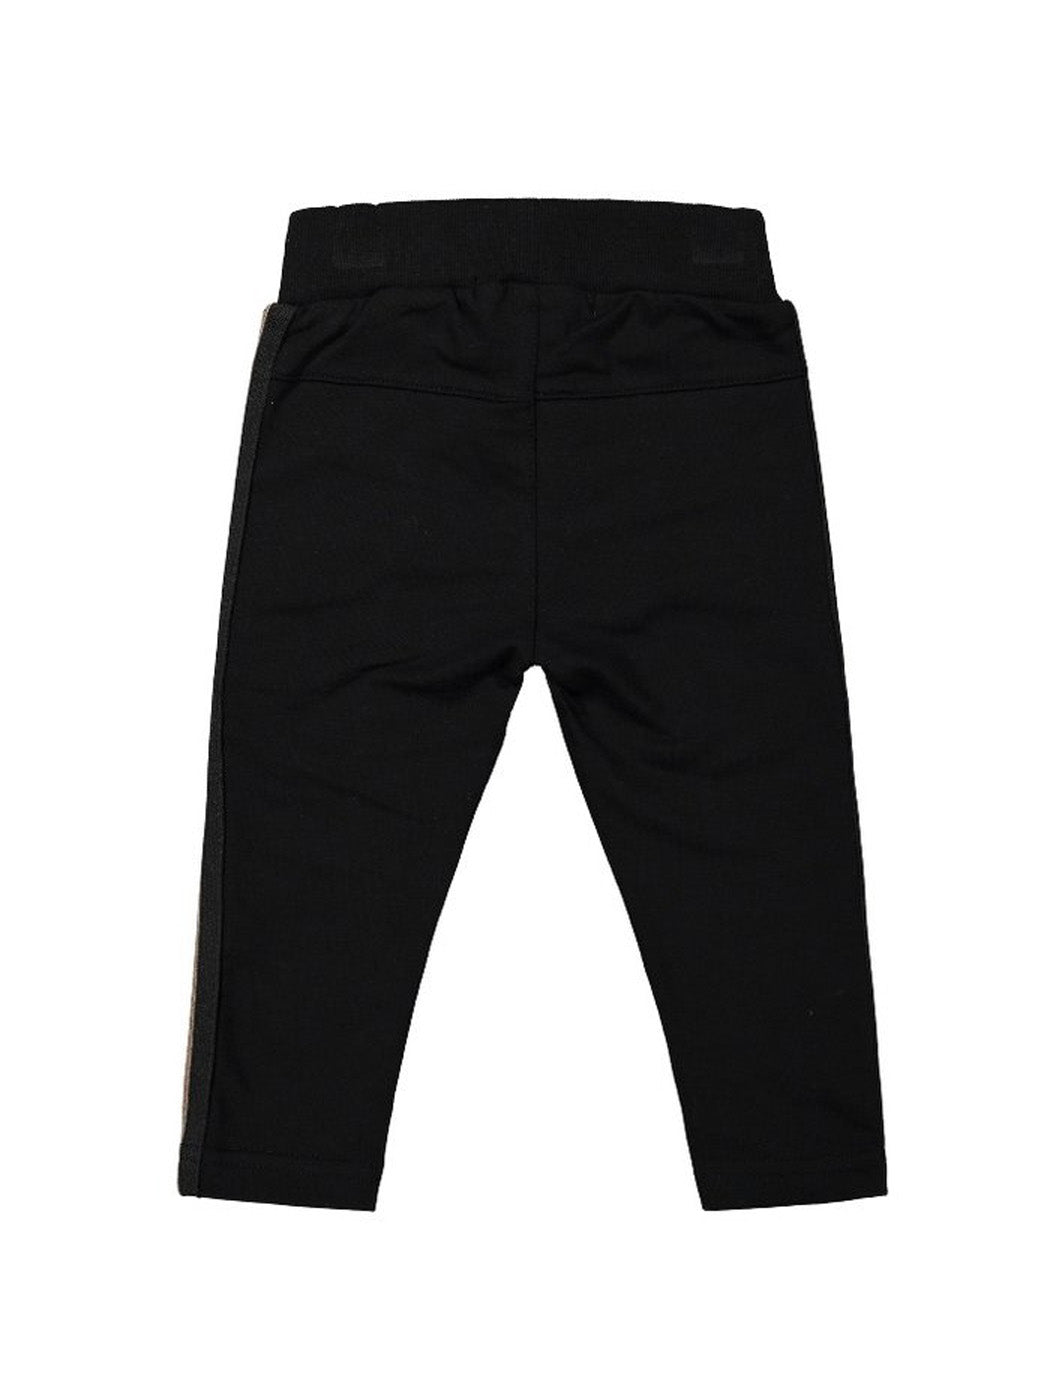 Girl's Jogging Trousers - F40931-37 Black